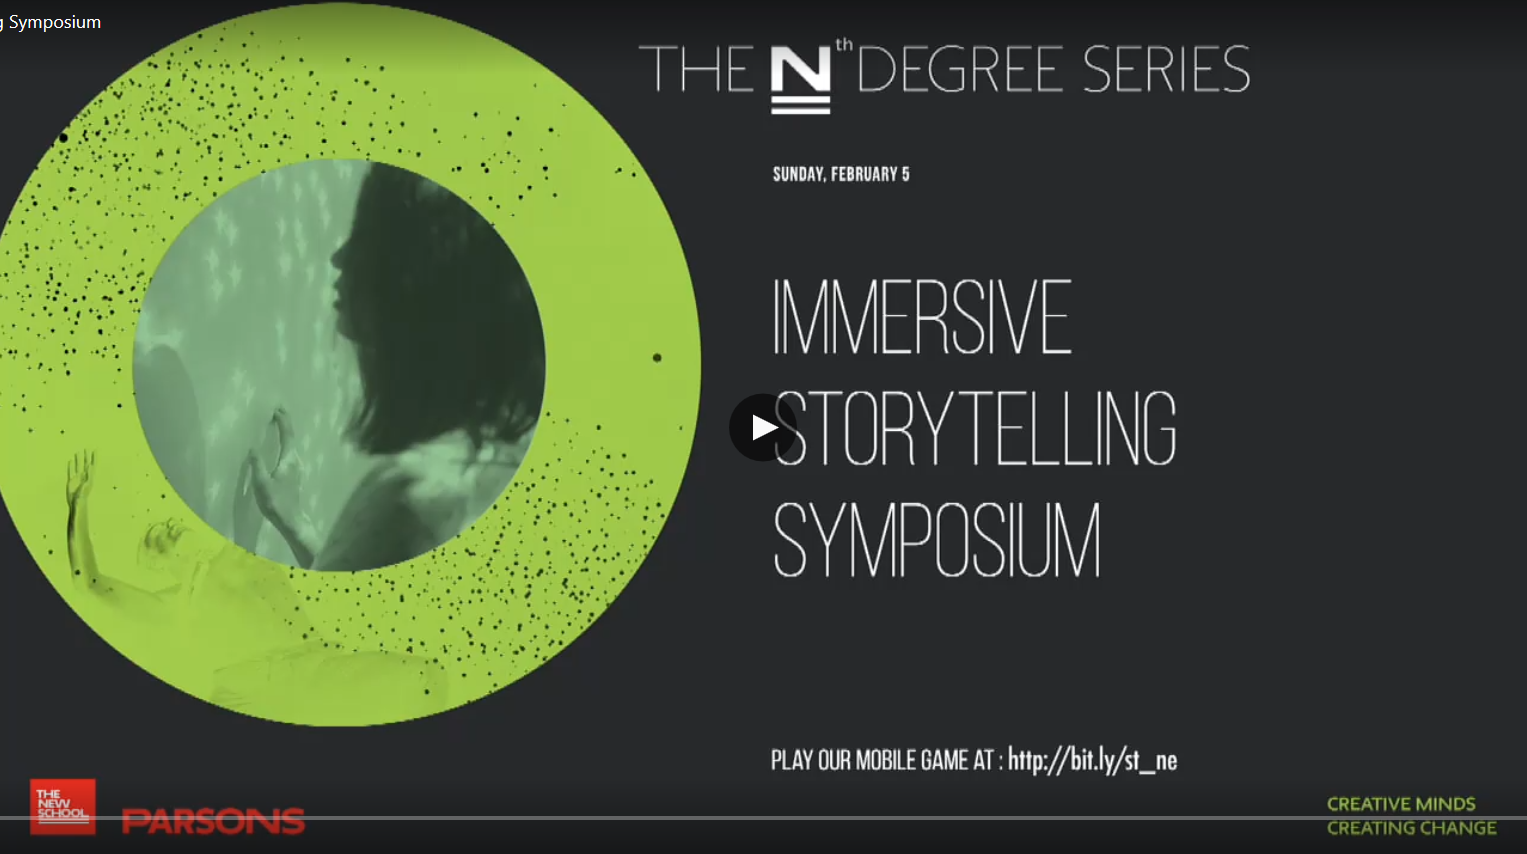 Immersive Storytelling Symposium